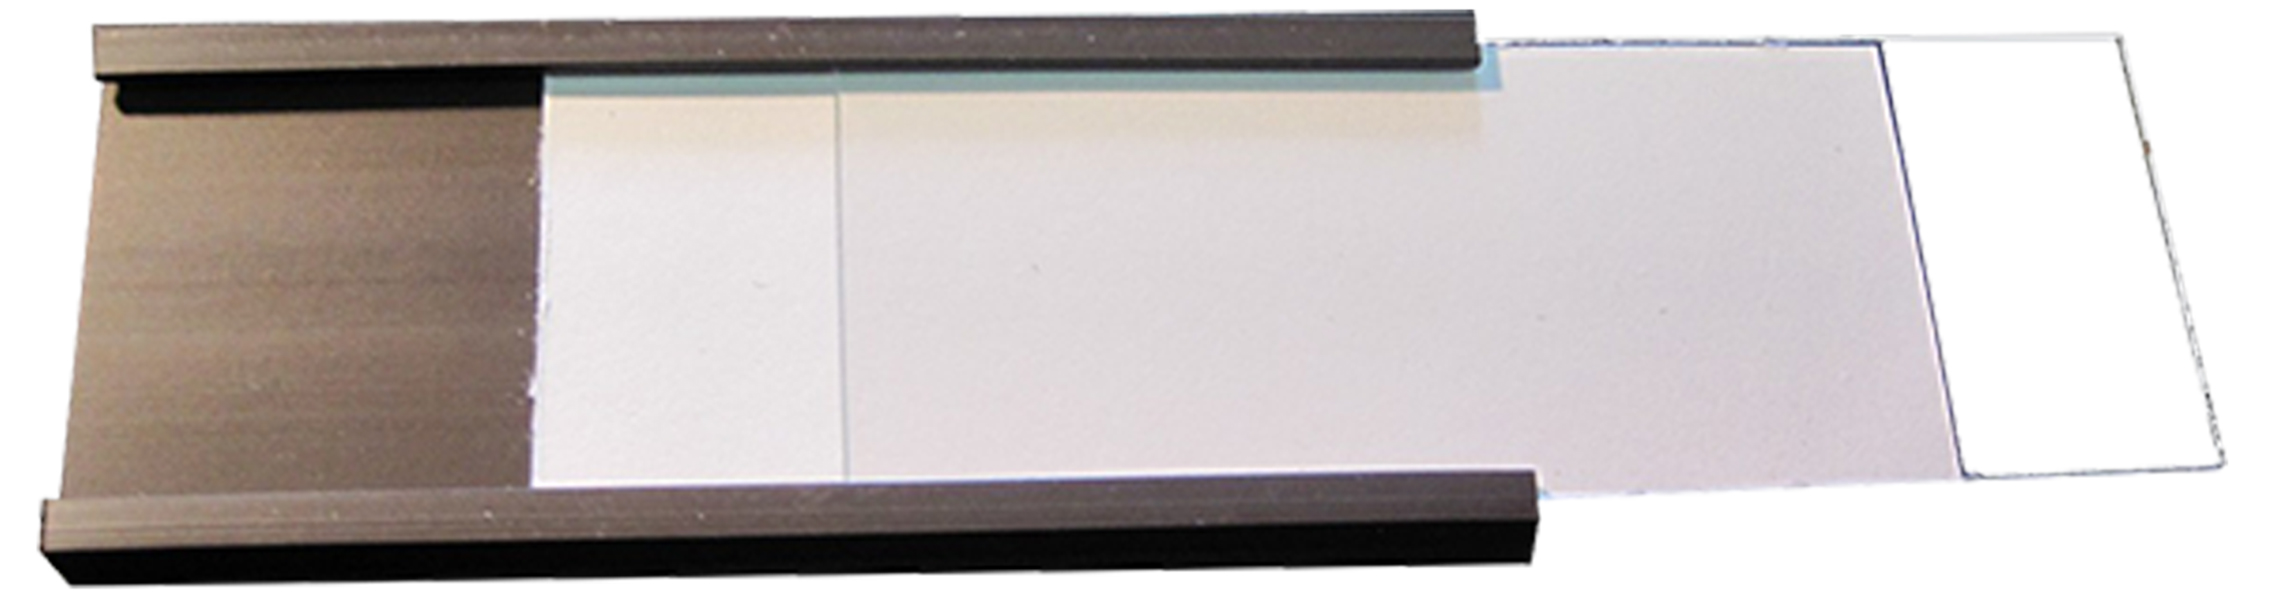 Perfil C Magnético Imanes flexibles en tiras Cintas magnéticas para estanterías Perfil magnetico portaetiquetas Porta etiquetas magnéticos 10mm-40mm